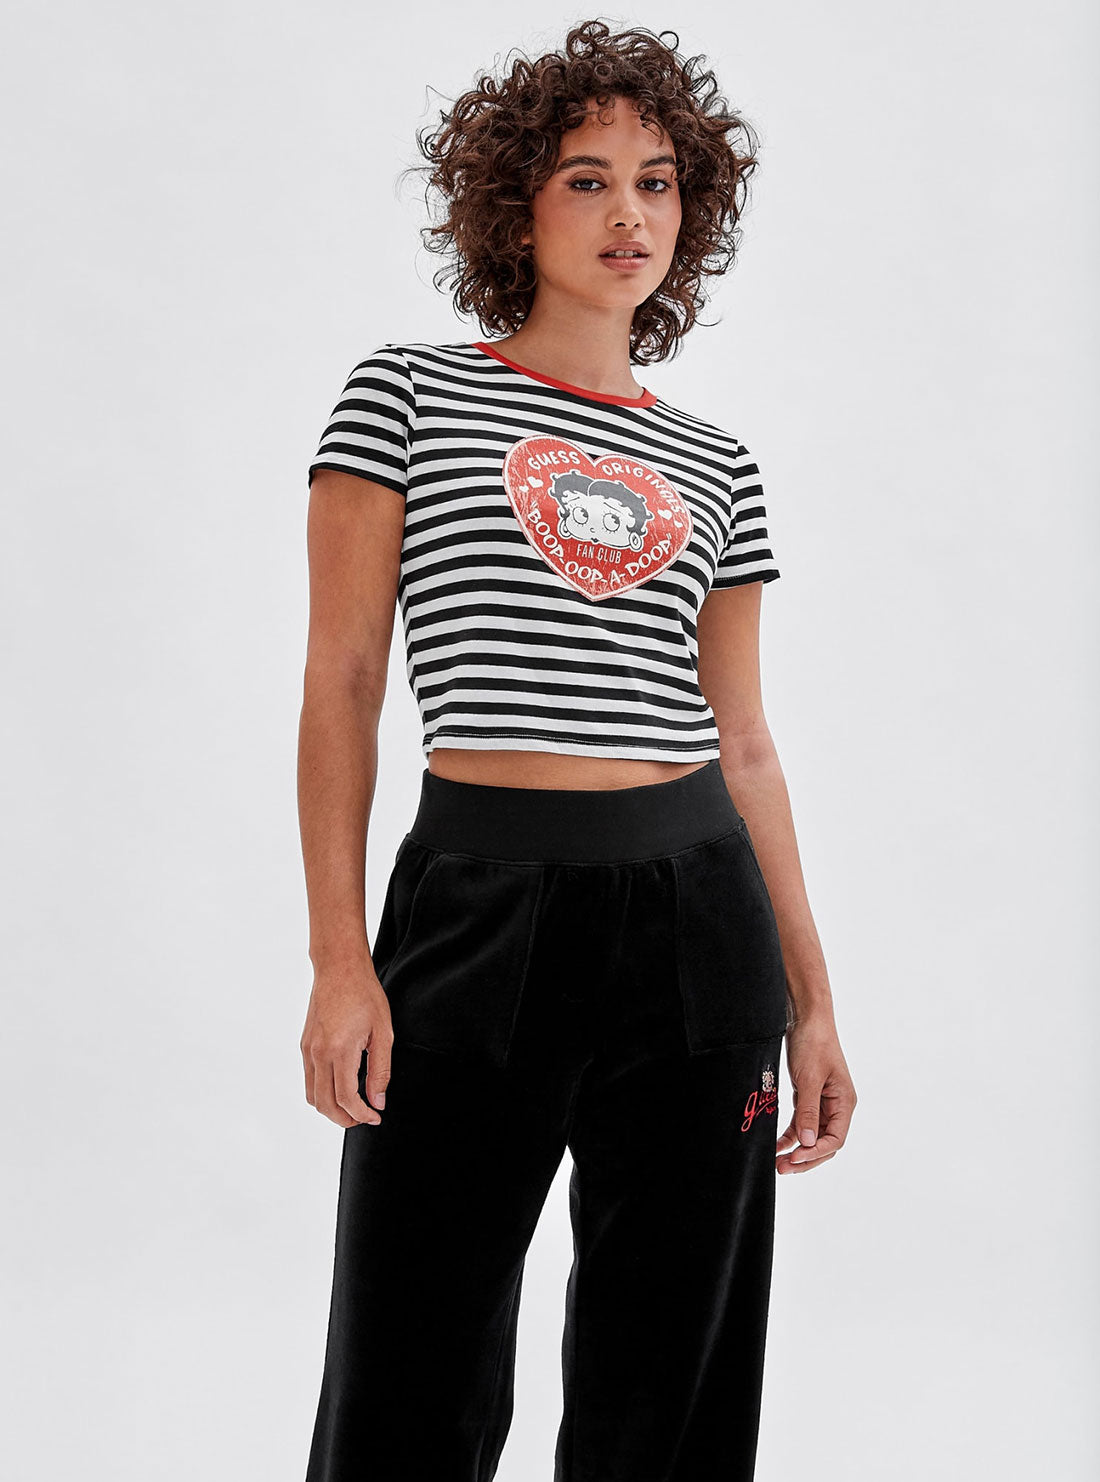 GUESS Women's Guess Originals x Betty Boop Black Striped Baby T-Shirt W2BP36KBA83 Front View